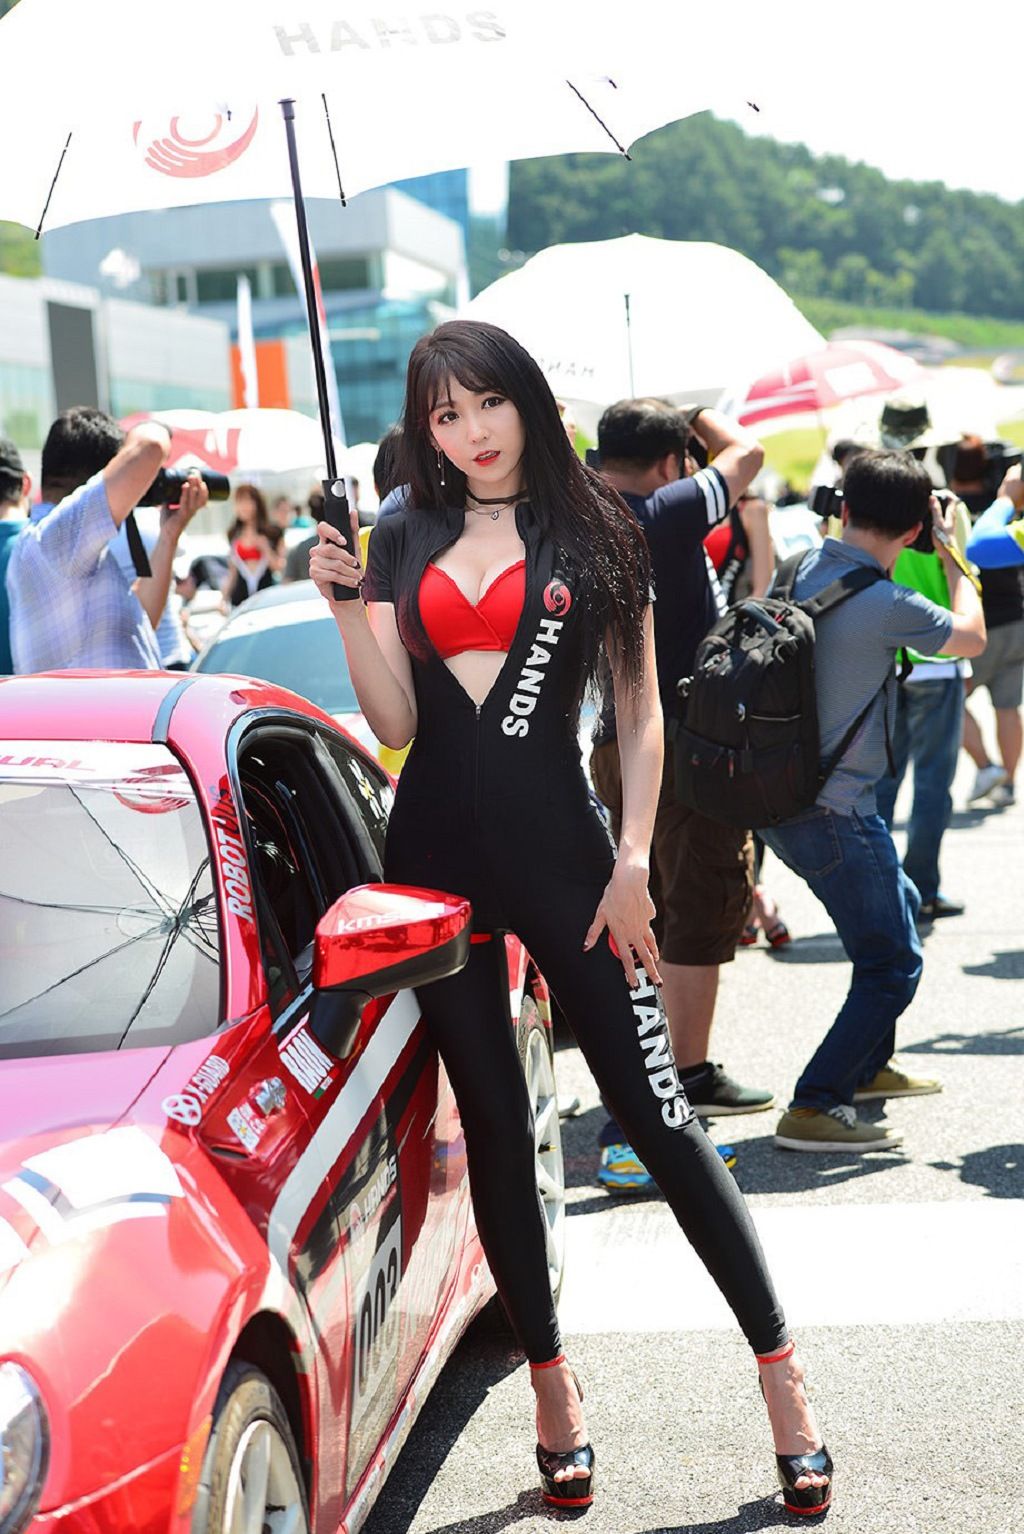 Image-Korean-Racing-Model-Lee-Eun-Hye-At-Incheon-Korea-Tuning-Festival-TruePic.net- Picture-46